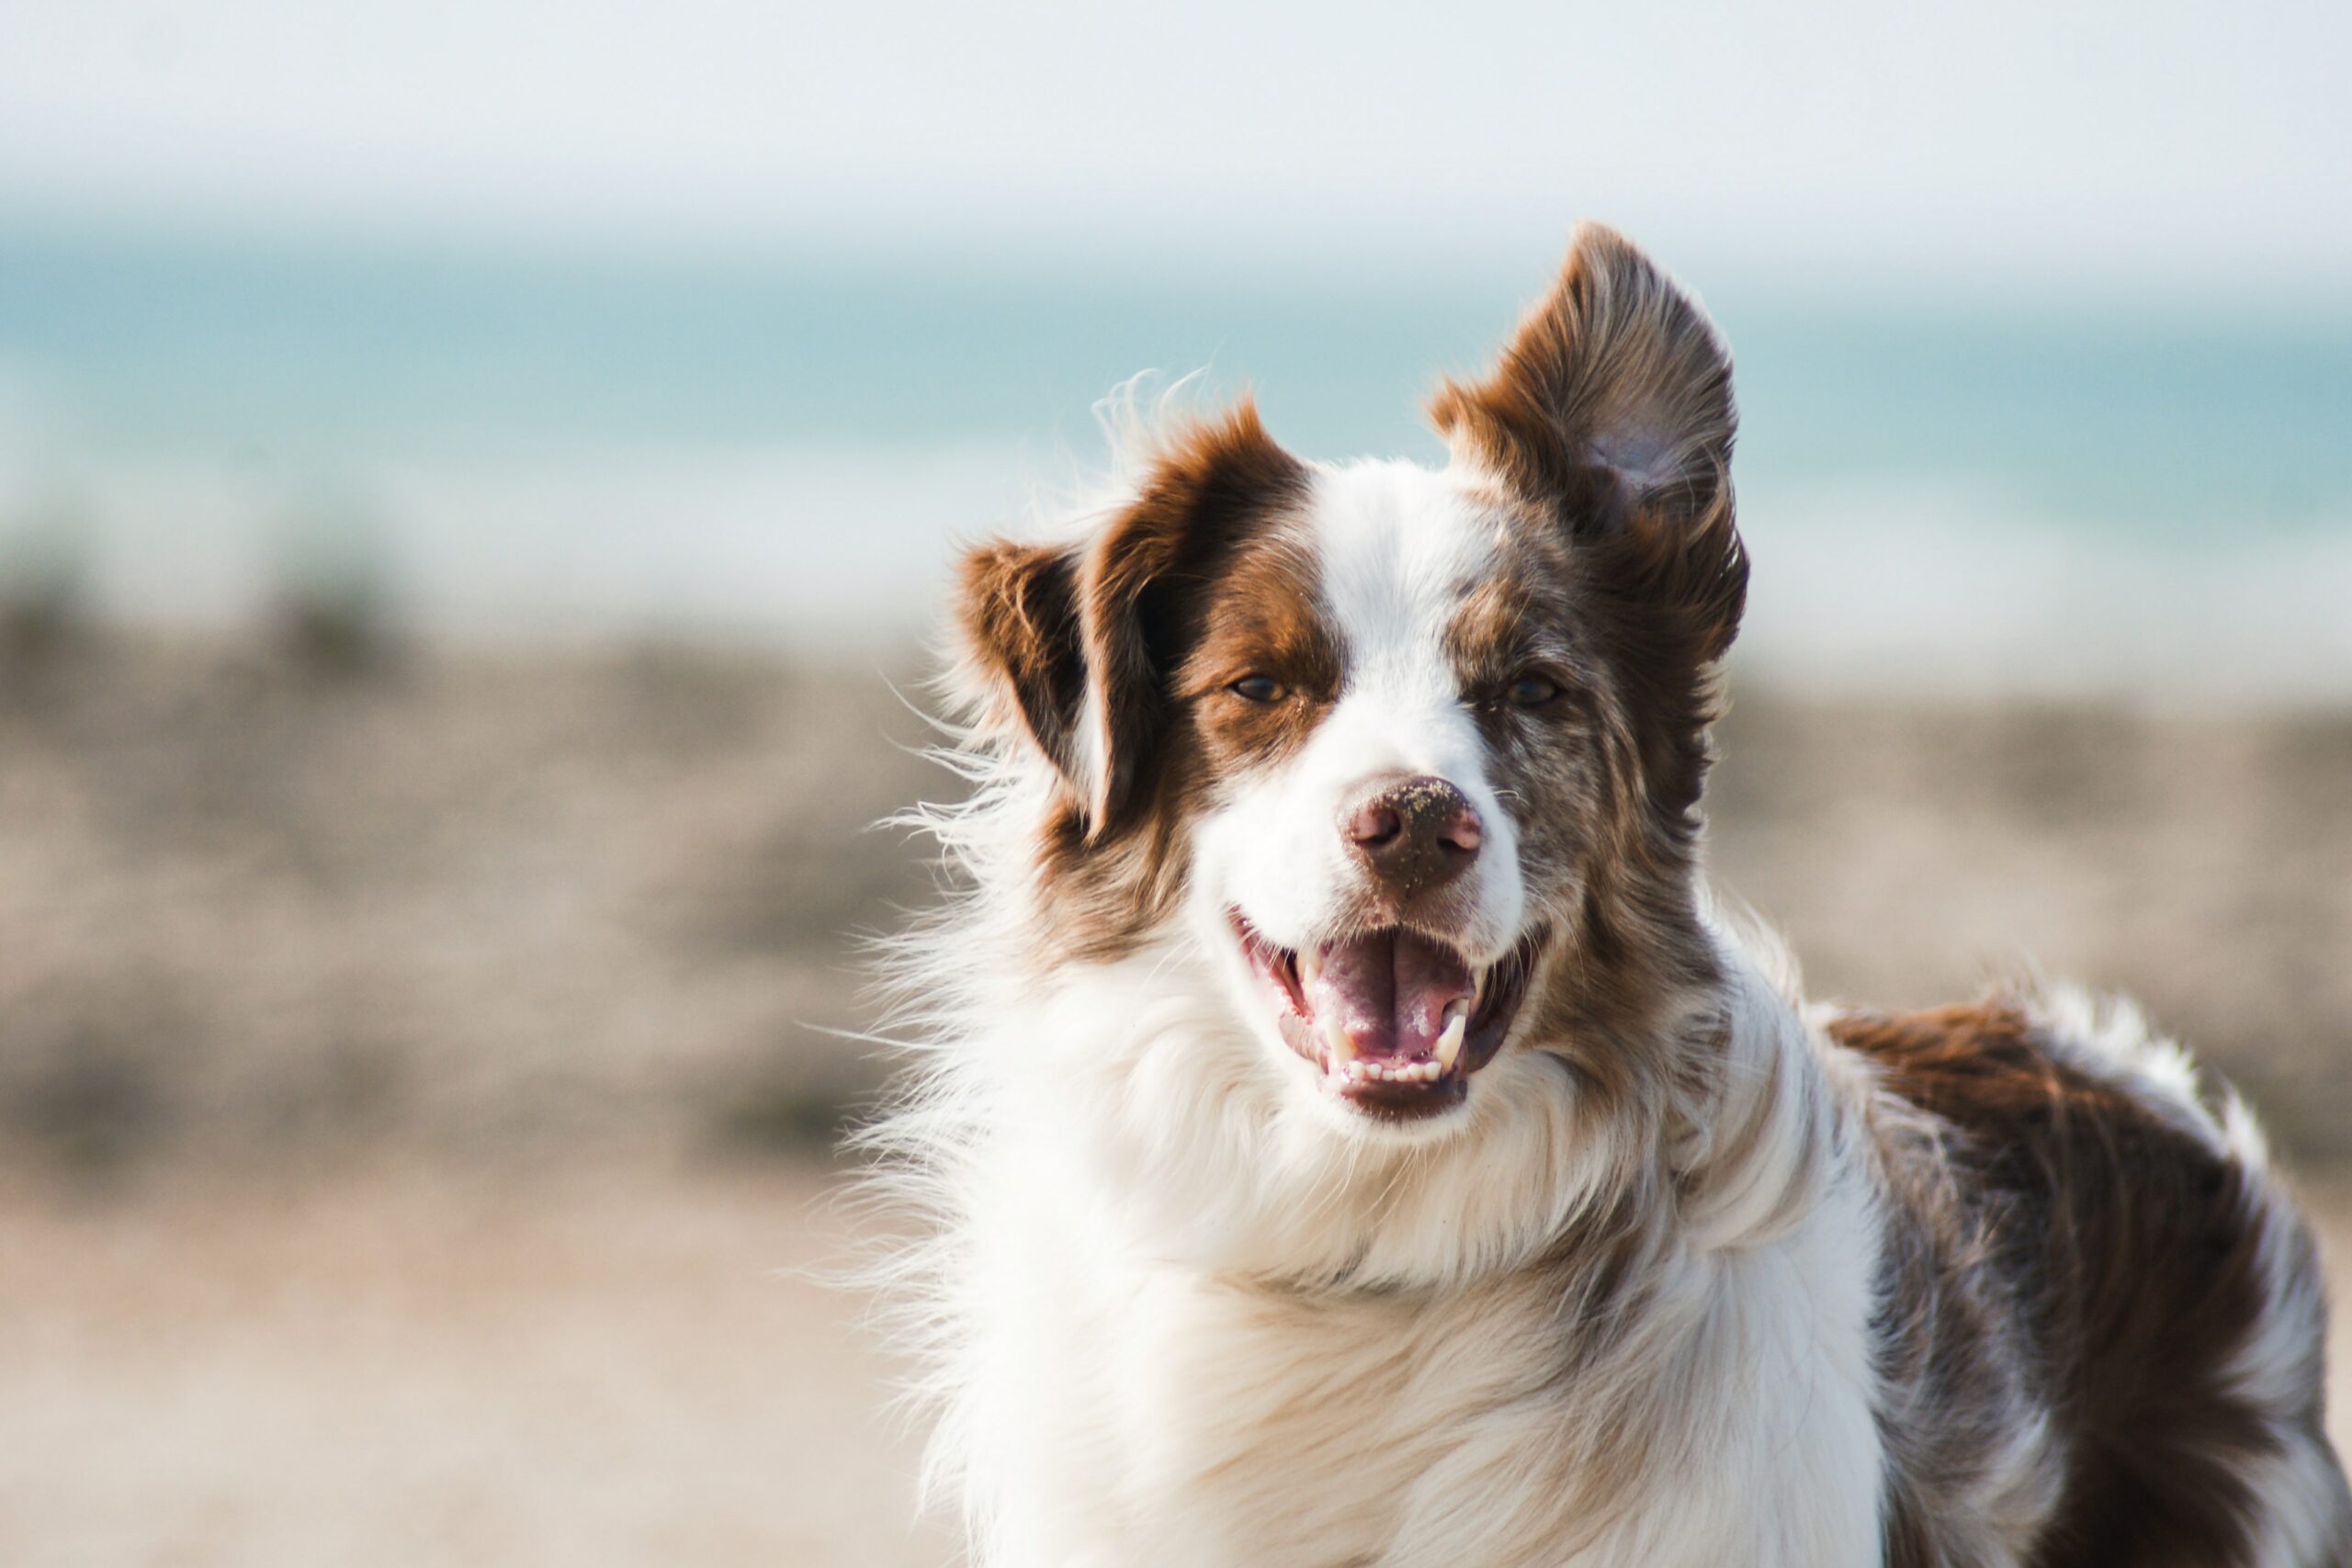 7 Benefits of Adopting a Rescue Dog